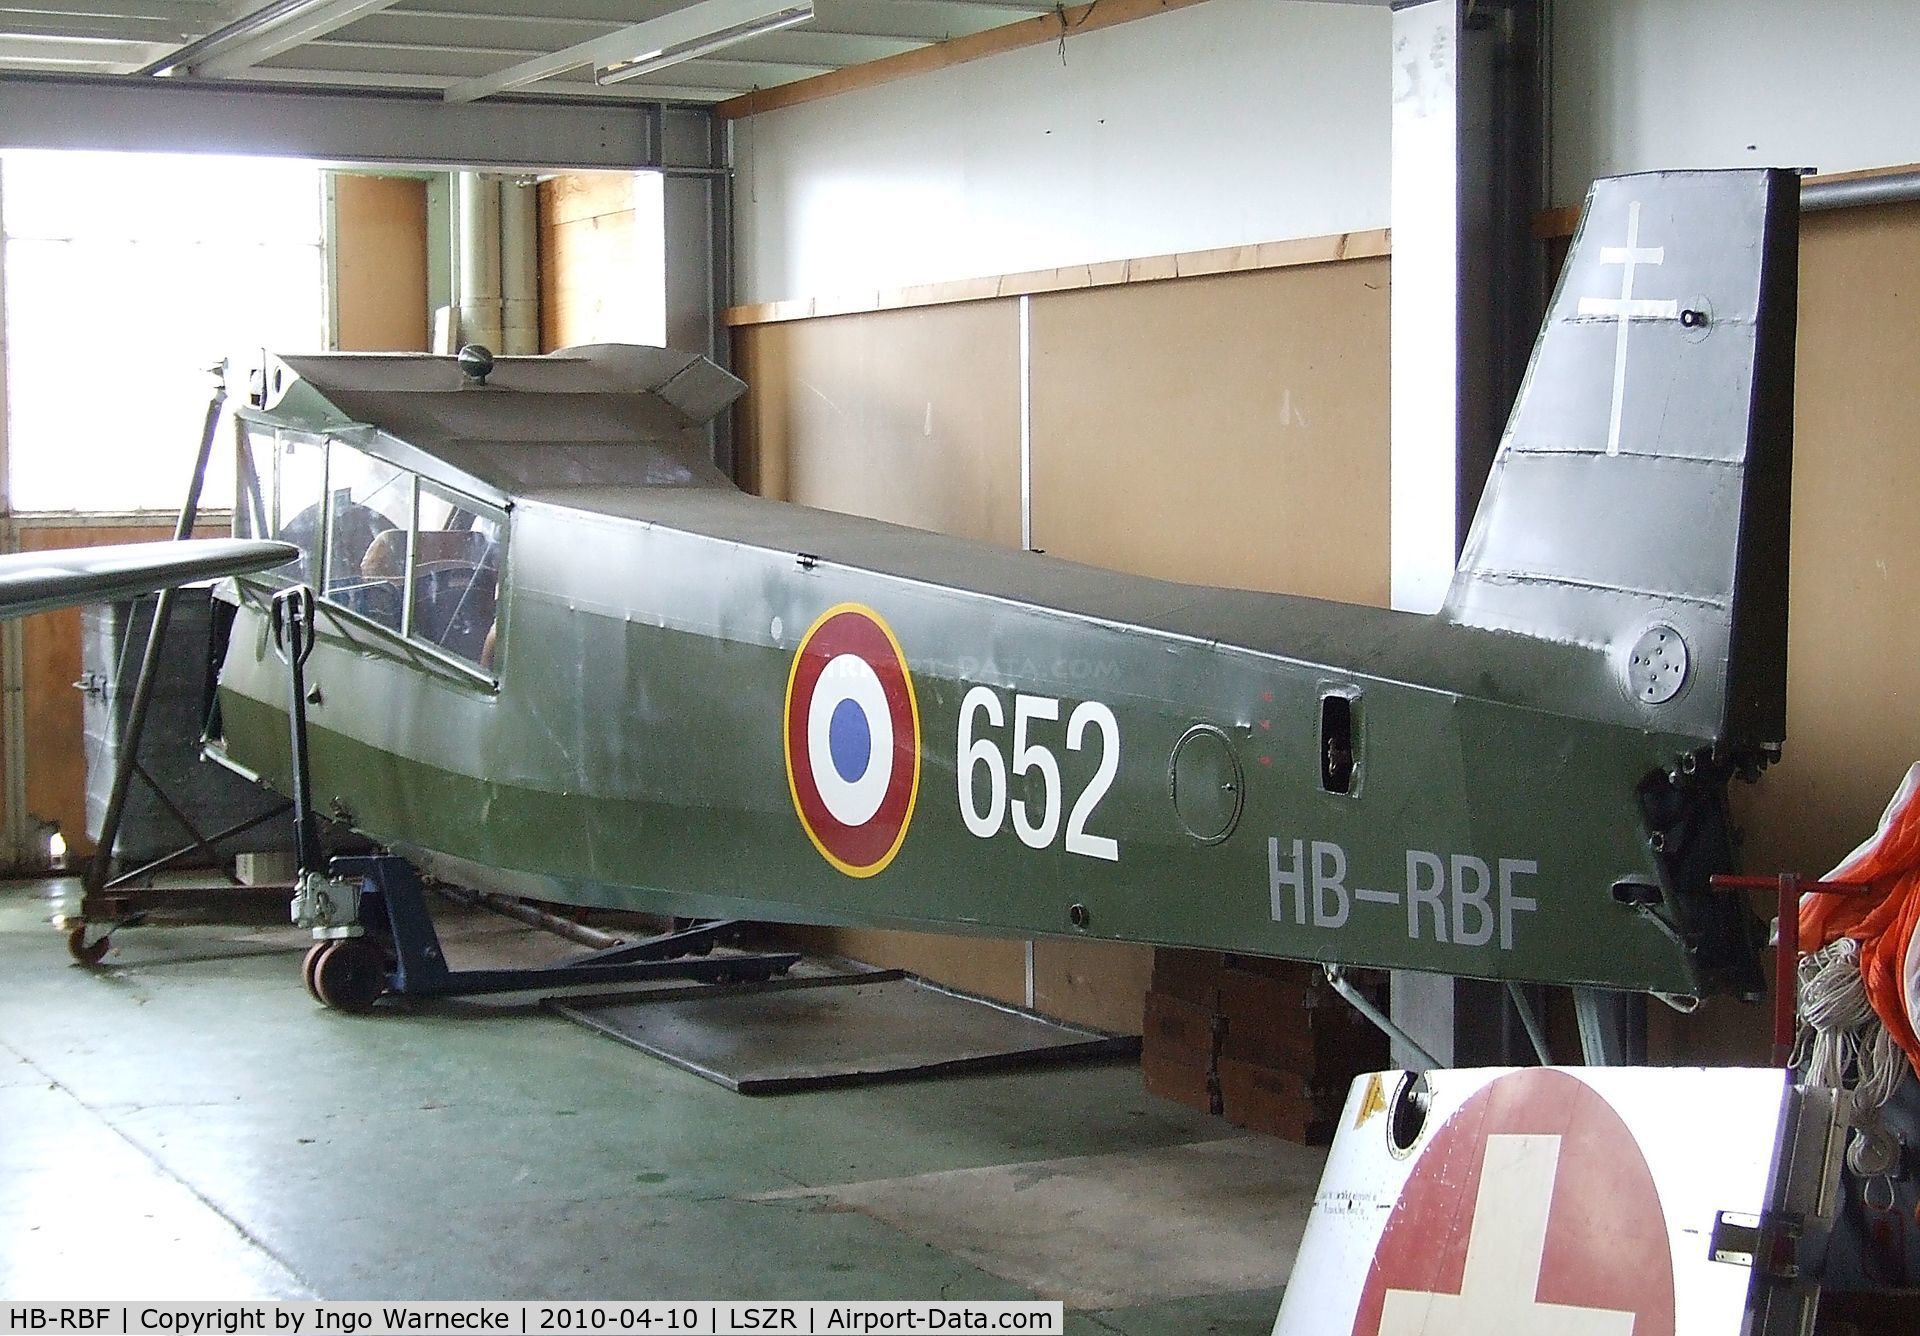 HB-RBF, Morane-Saulnier MS-502 Criquet C/N 680, Morane-Saulnier MS.502 Criquet (post-war french Fi 156 Storch) (fuselage only) at the Fliegermuseum Altenrhein